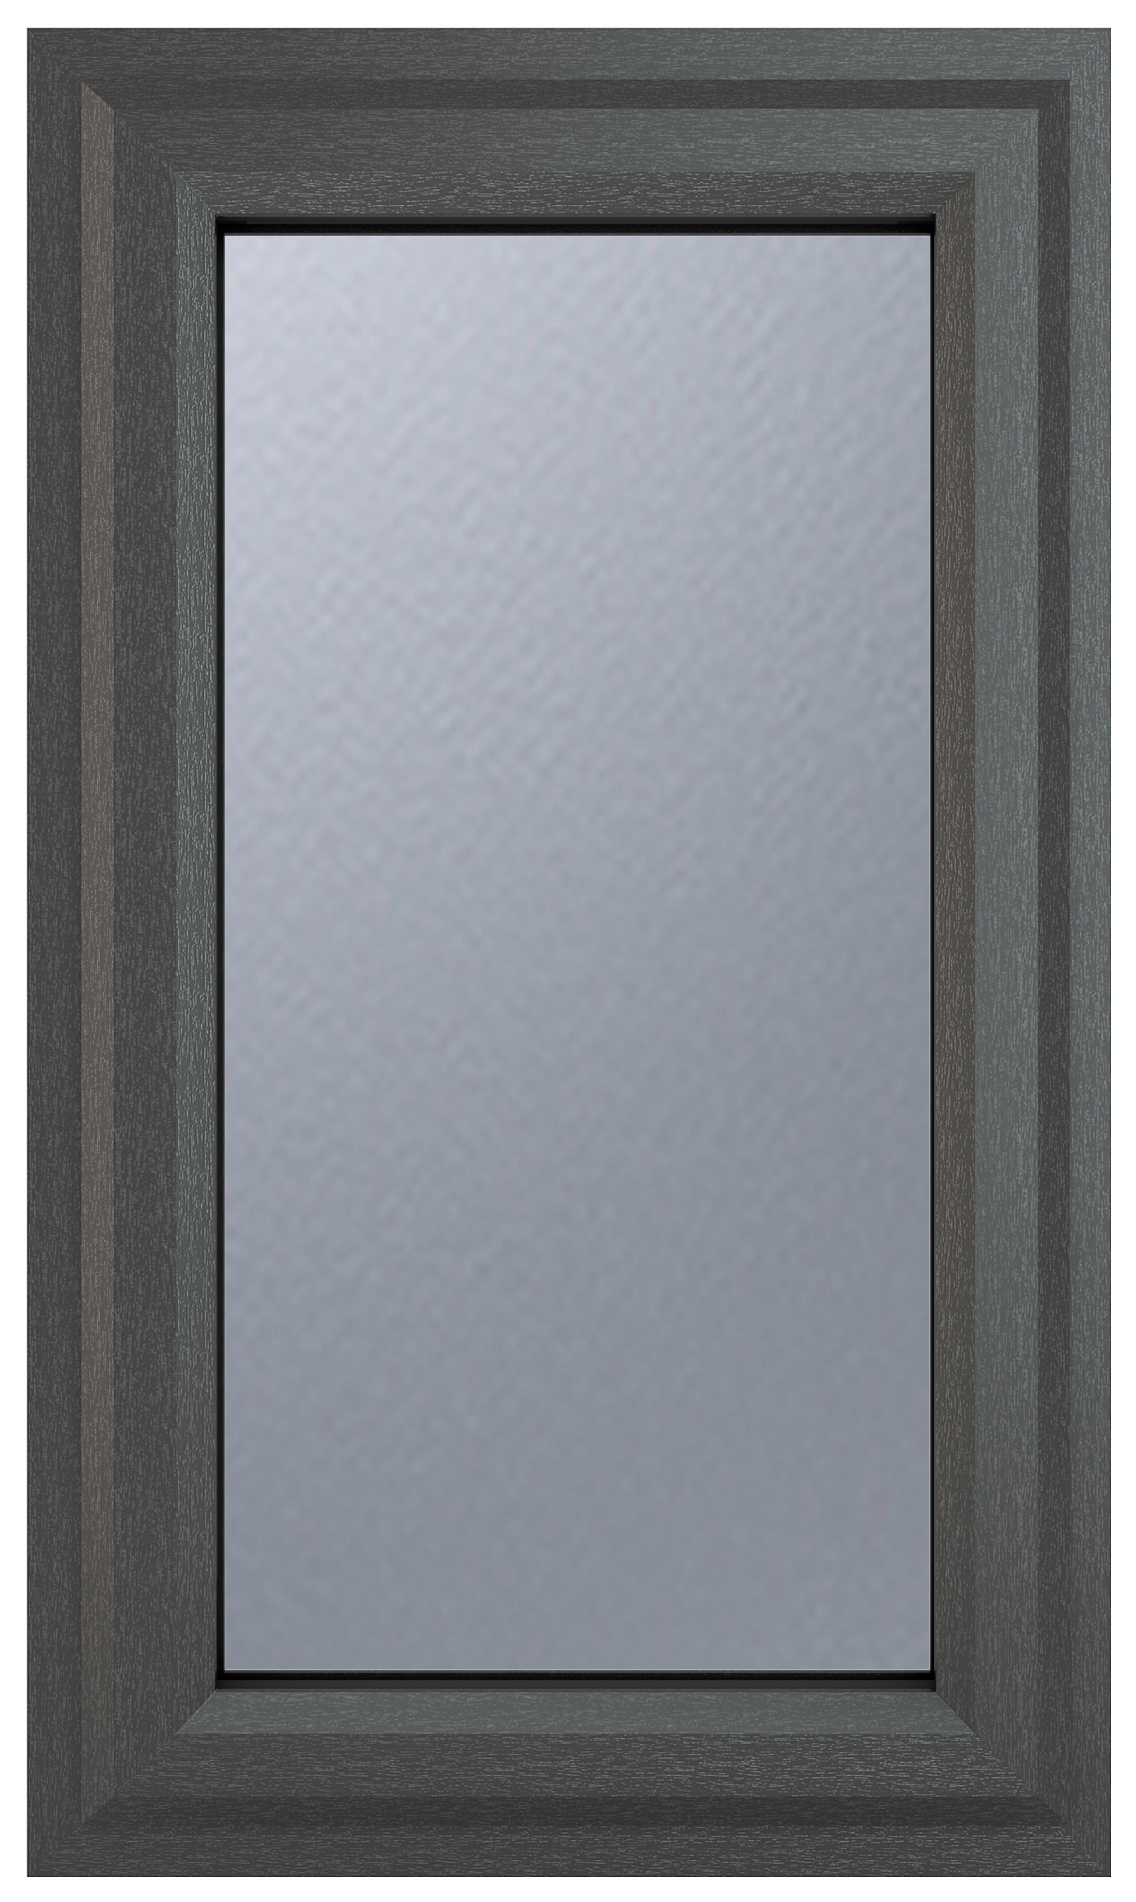 Crystal uPVC Grey / White Left Hung Obscure Triple Glazed Window - 610 x 965mm